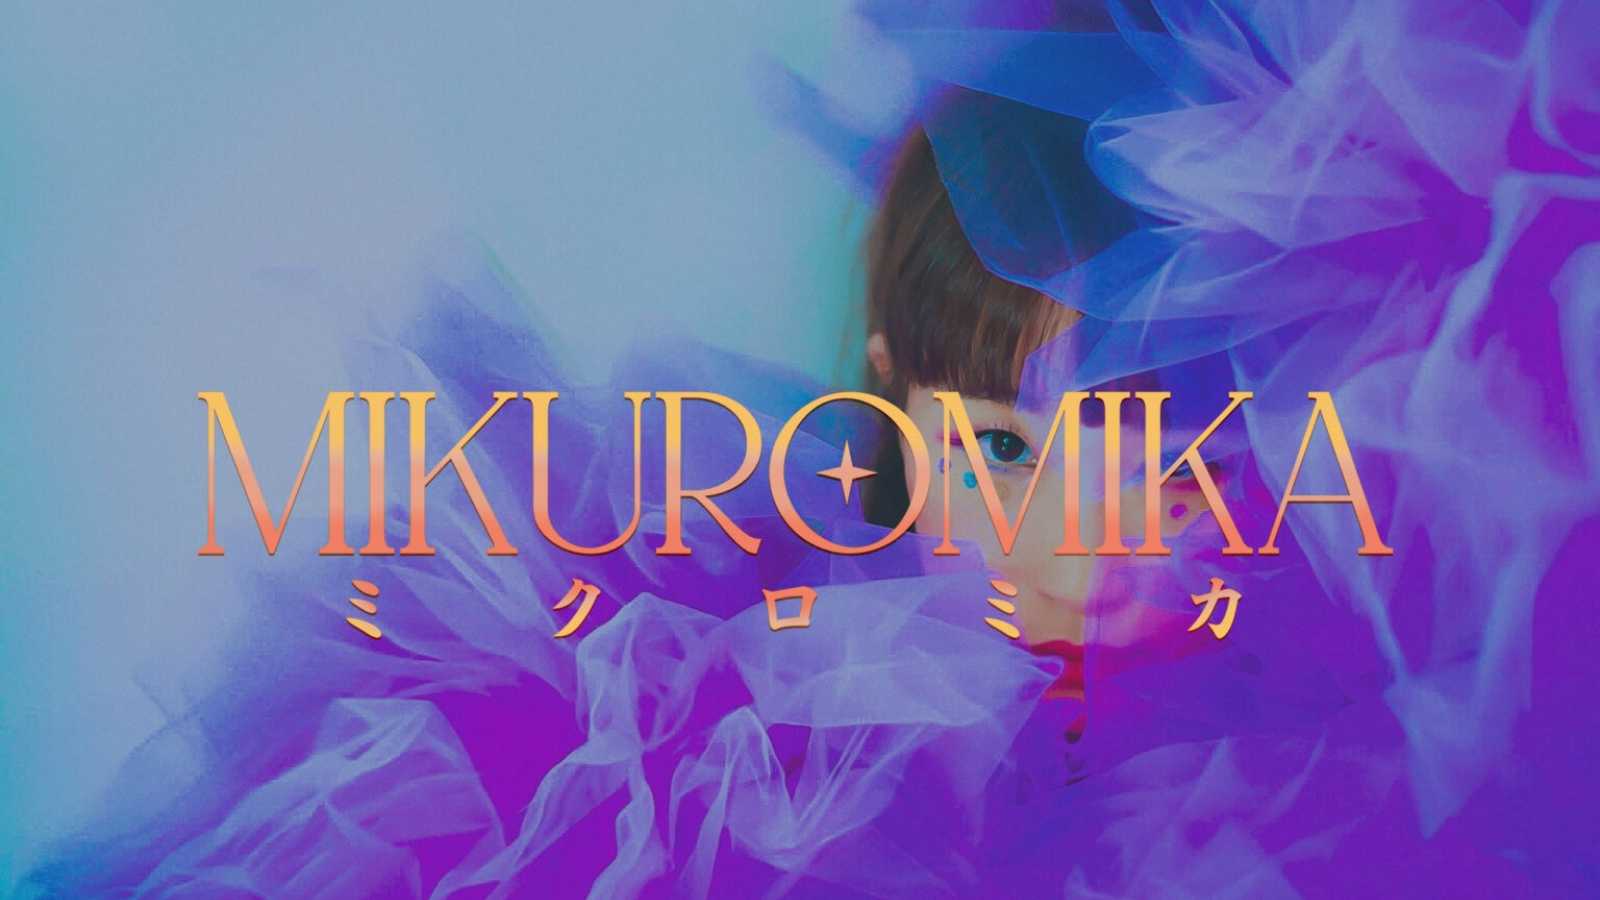 MIKUROMIKA rejoint SETSUZOKU RECORDS © MIKUROMIKA. All rights reserved.